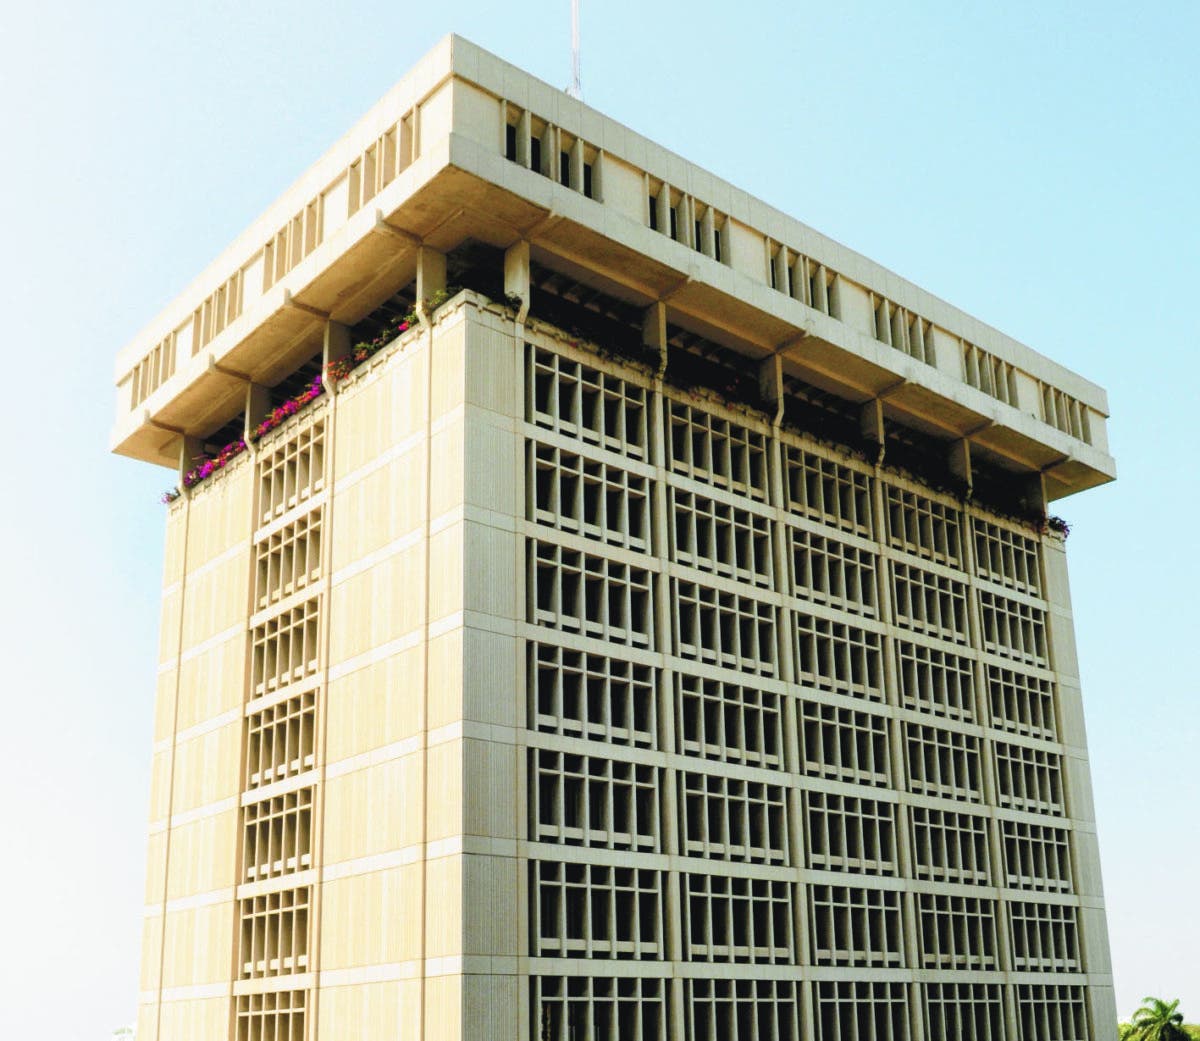 Banco Central anuncia depósito de de 457.56 millones de DEG